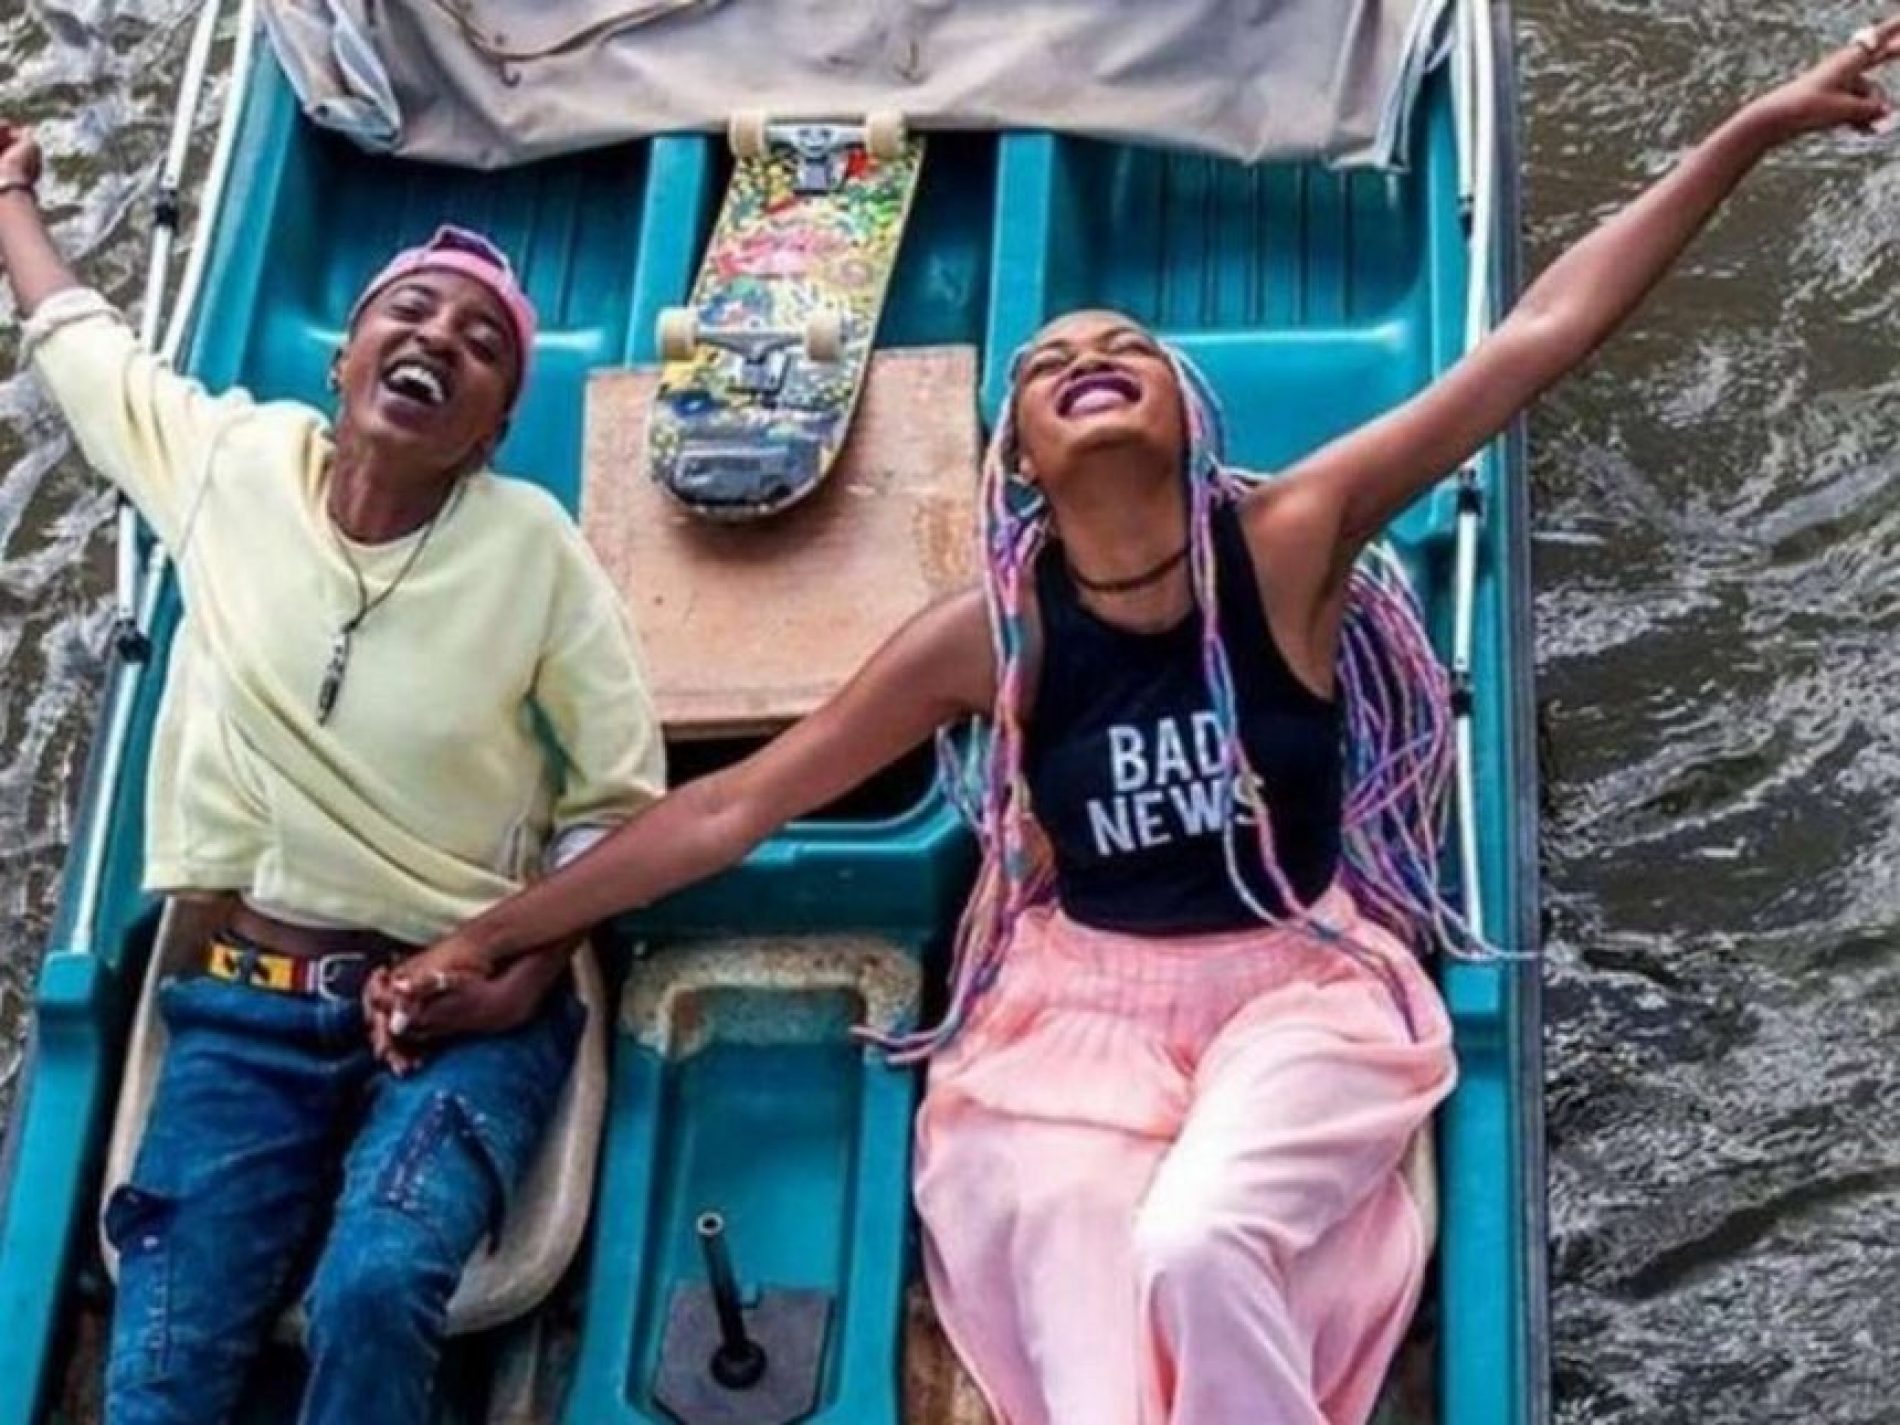 Lesbian film ‘Rafiki’ smashes box office records in Kenya despite ban for ‘promoting homosexuality’